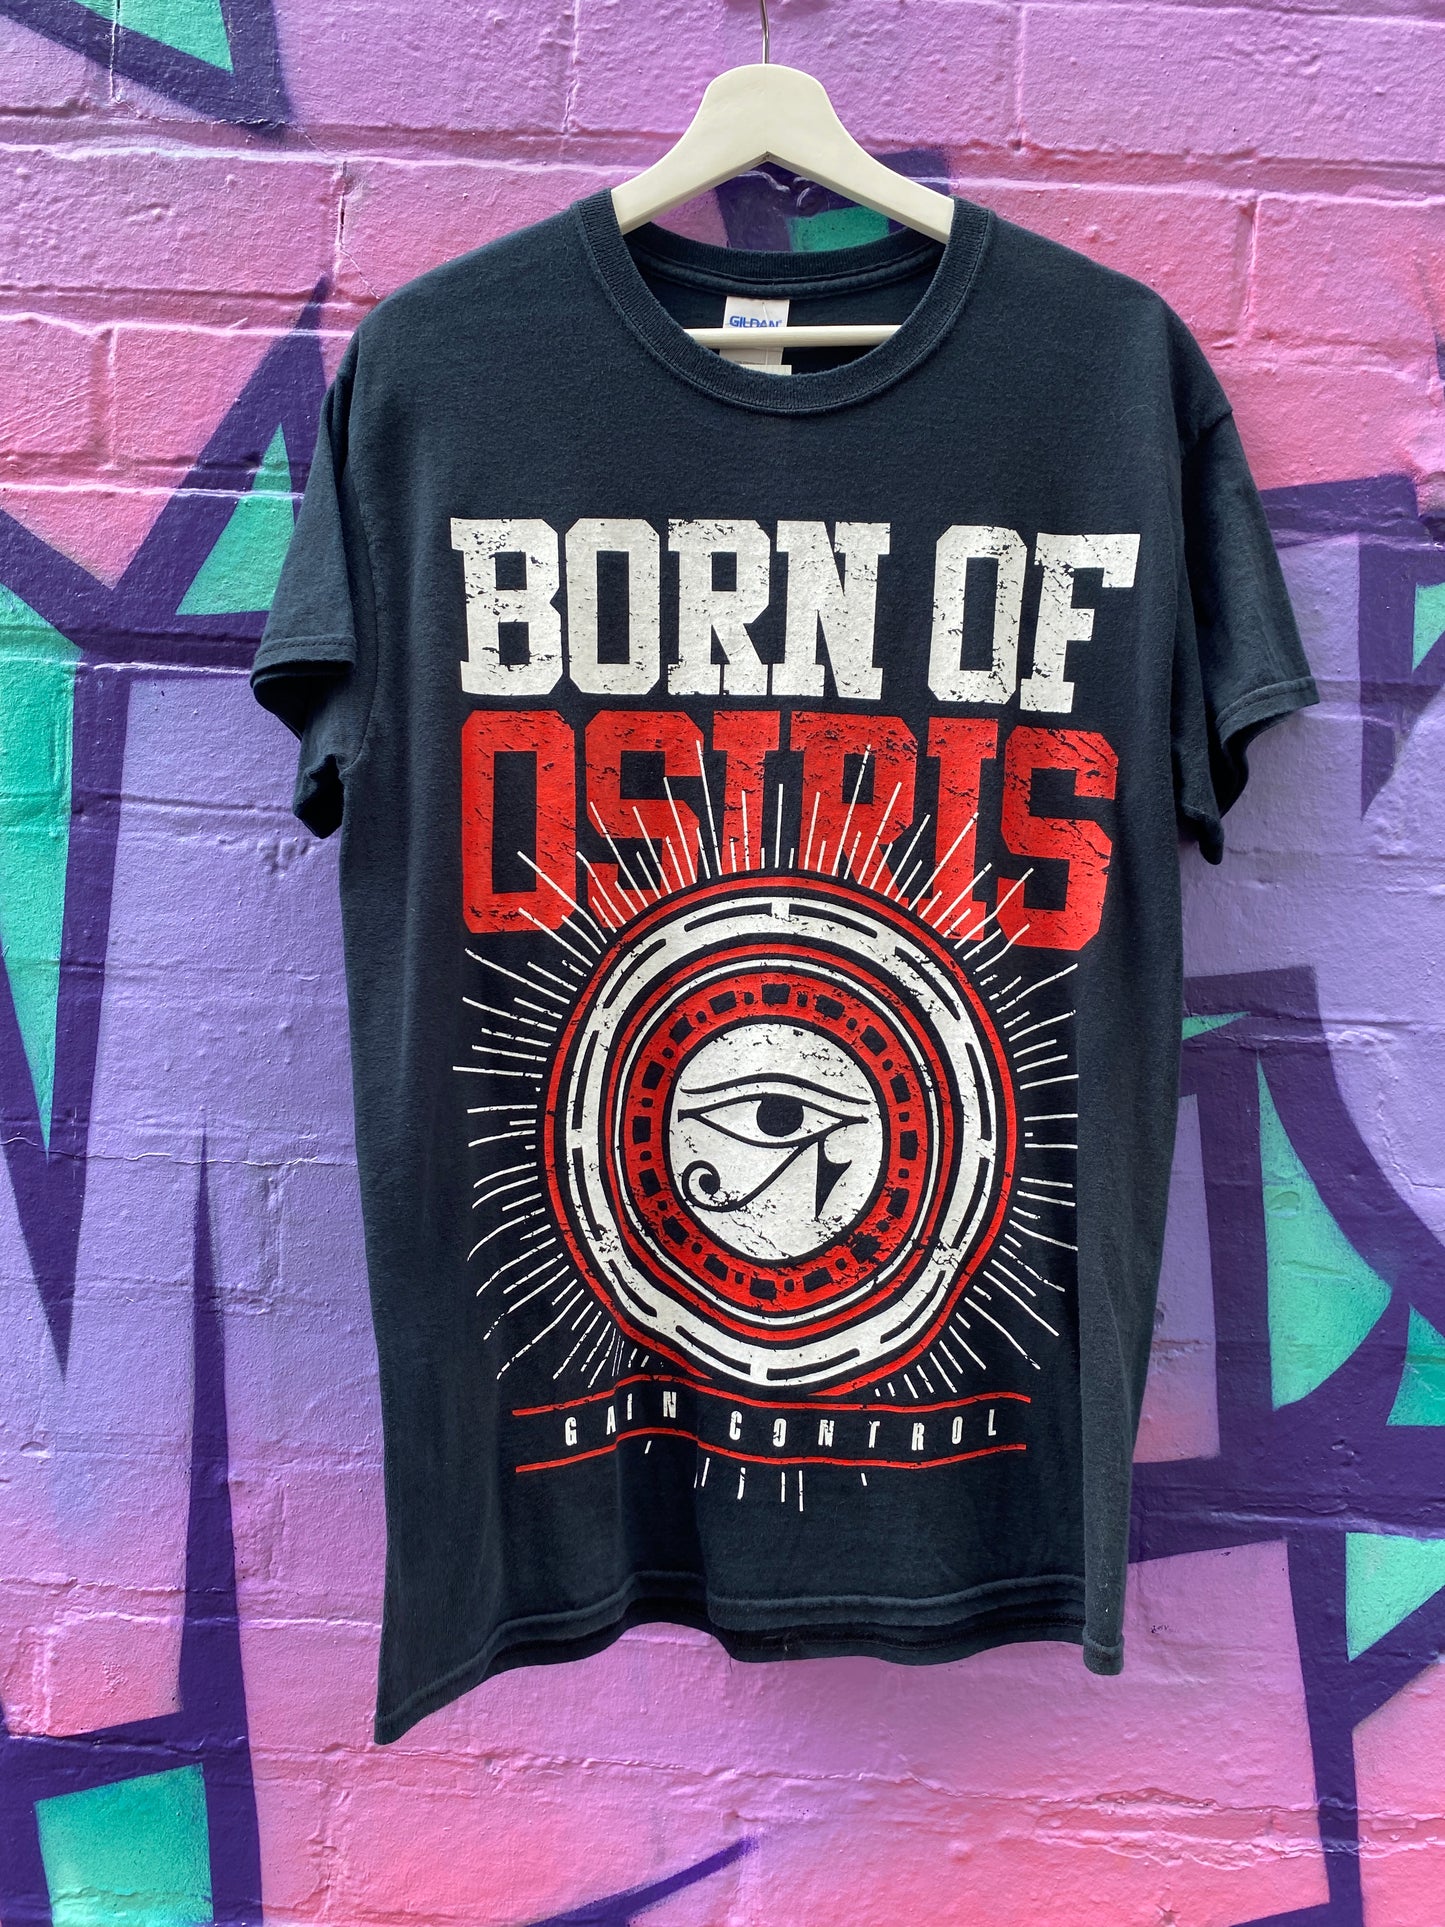 M - Born of Osiris - Gain Control